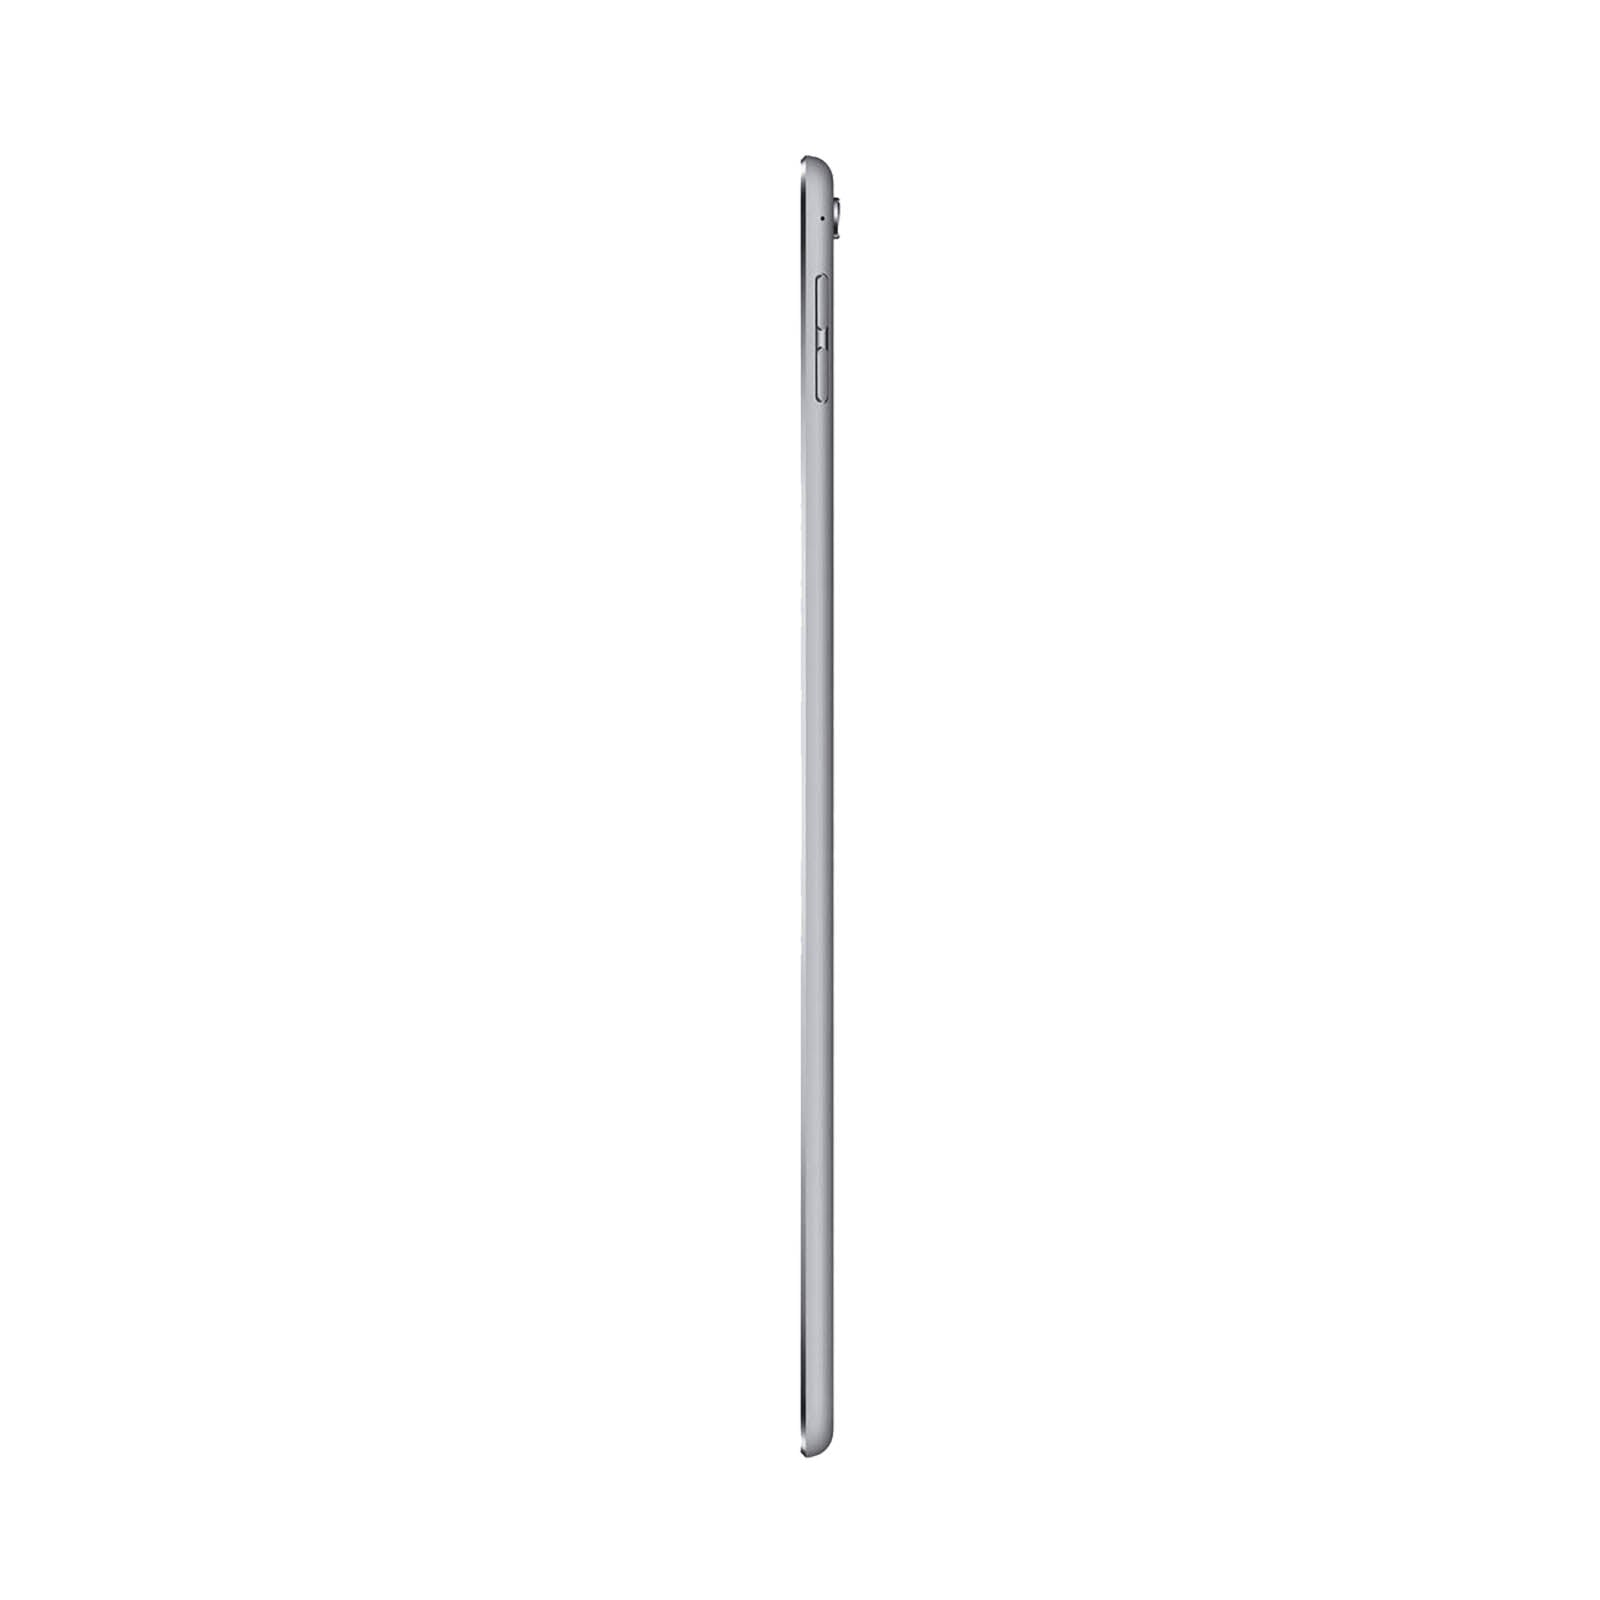 Apple iPad Pro 9.7" 128GB Space Grey Pristine - Unlocked